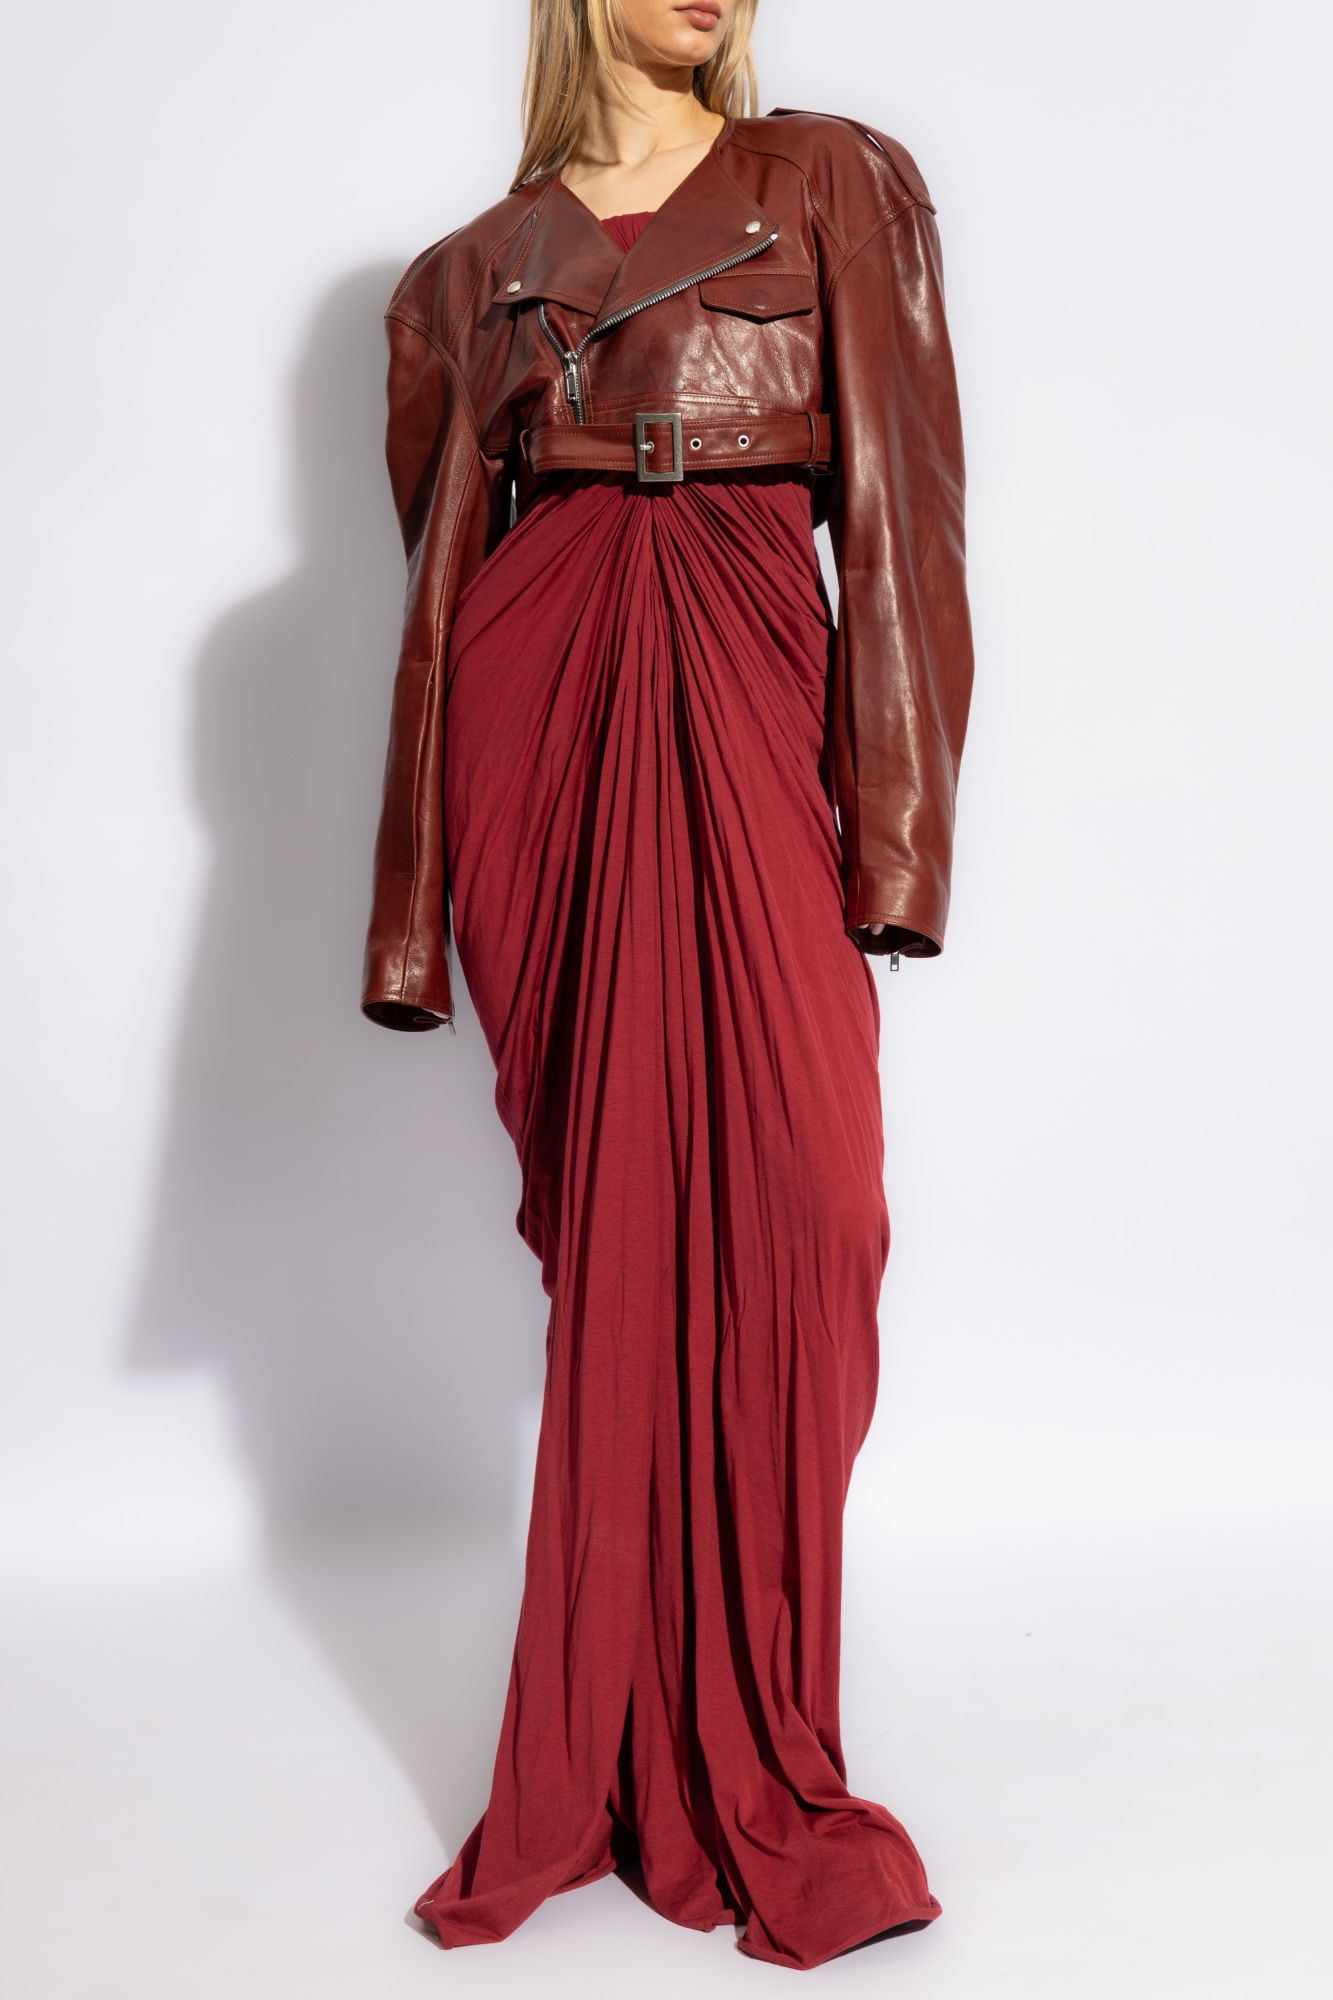 Tiered Cotton Poplin u0026 Lace Maxi Knit dress - Red 'Radiance' Knit dress  Rick Owens - SchaferandweinerShops Zimbabwe